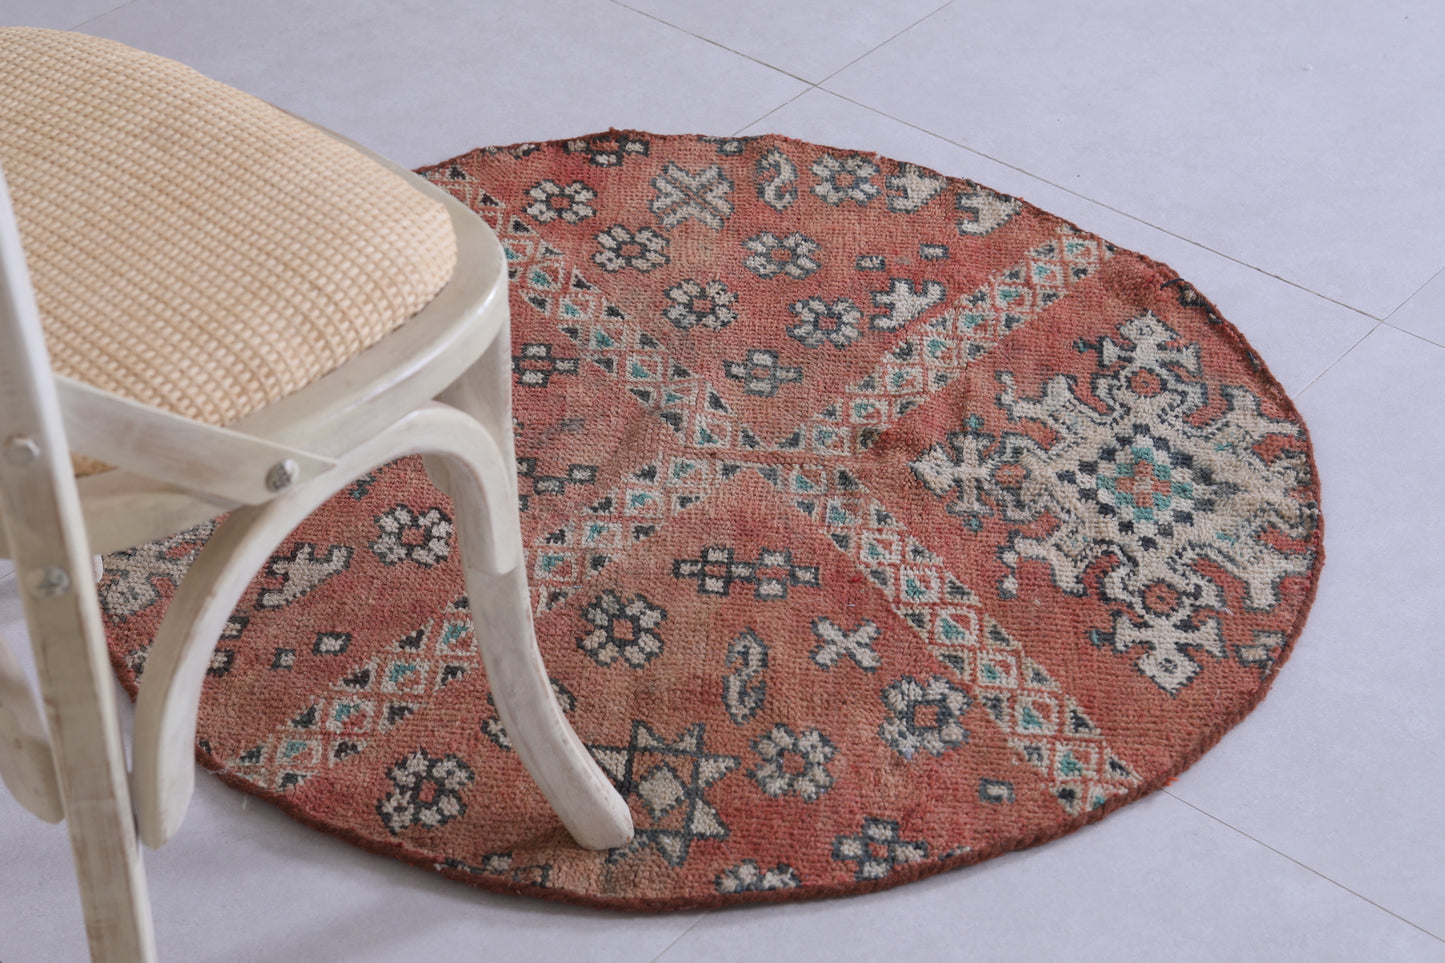 vintage moroccan rug 3.1 Feet